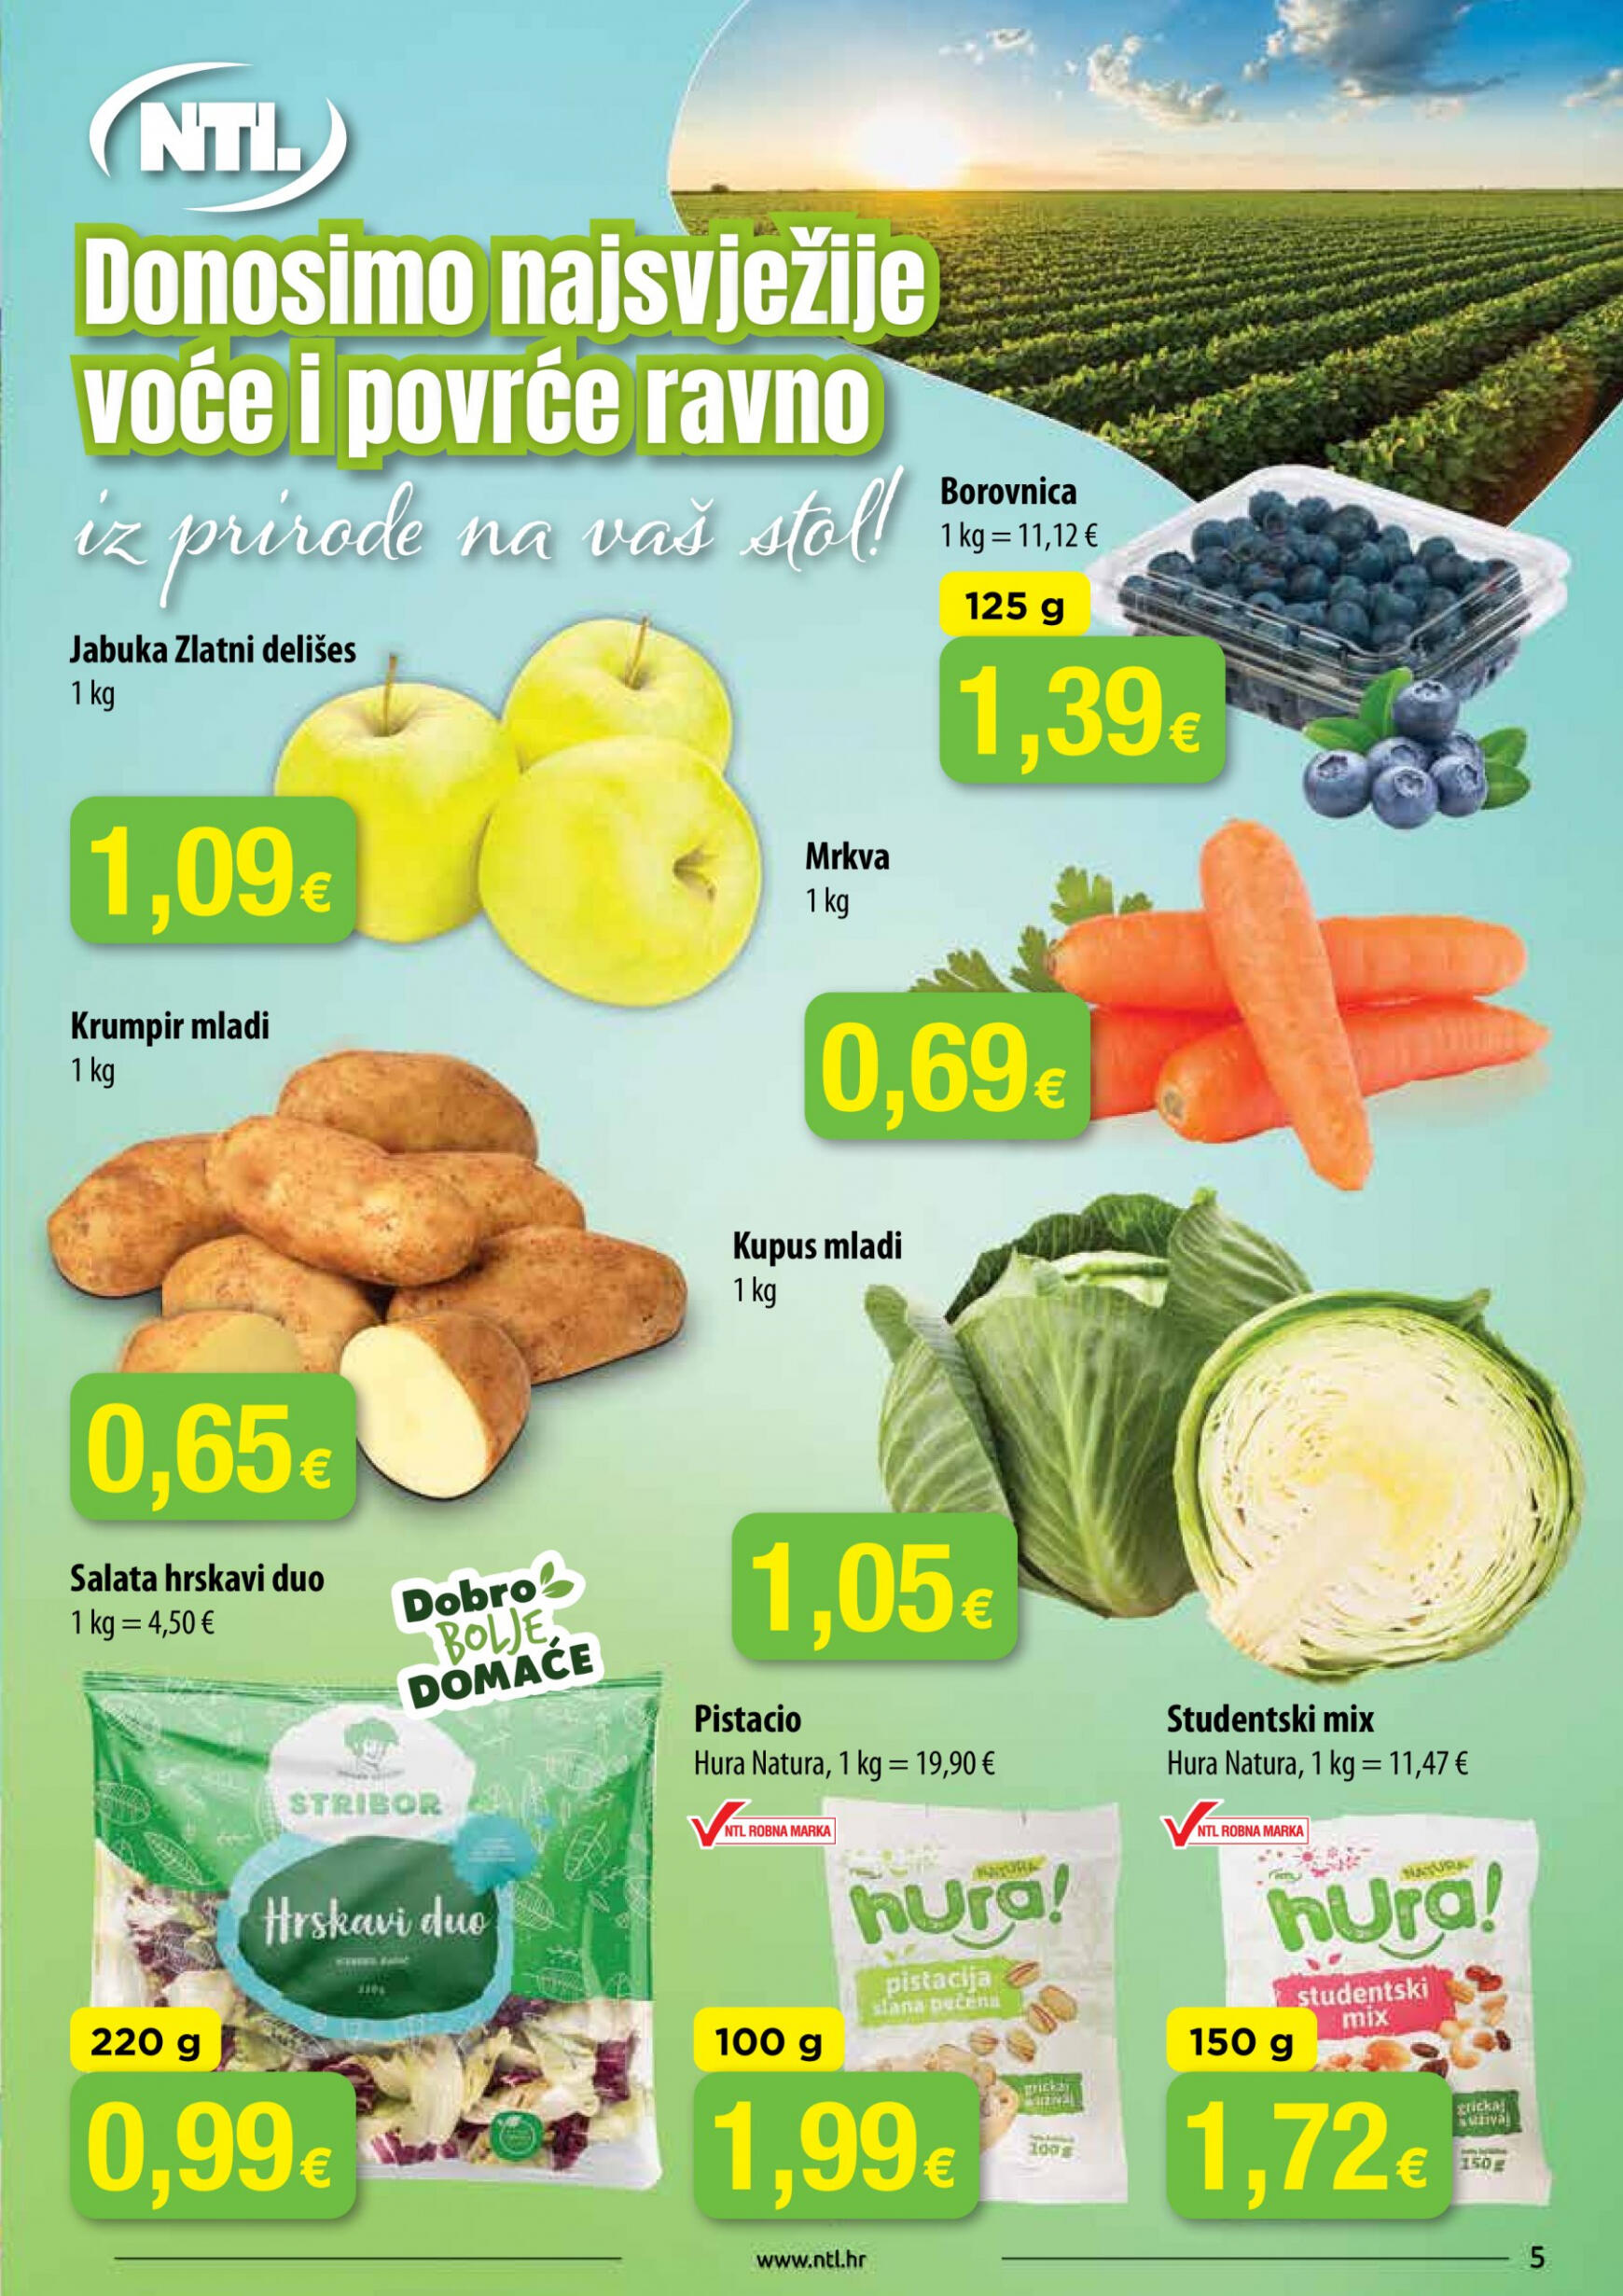 ntl - Novi katalog NTL - Supermarketi Soblinec, Krapina, Duga Resa 10.04. - 16.04. - page: 5